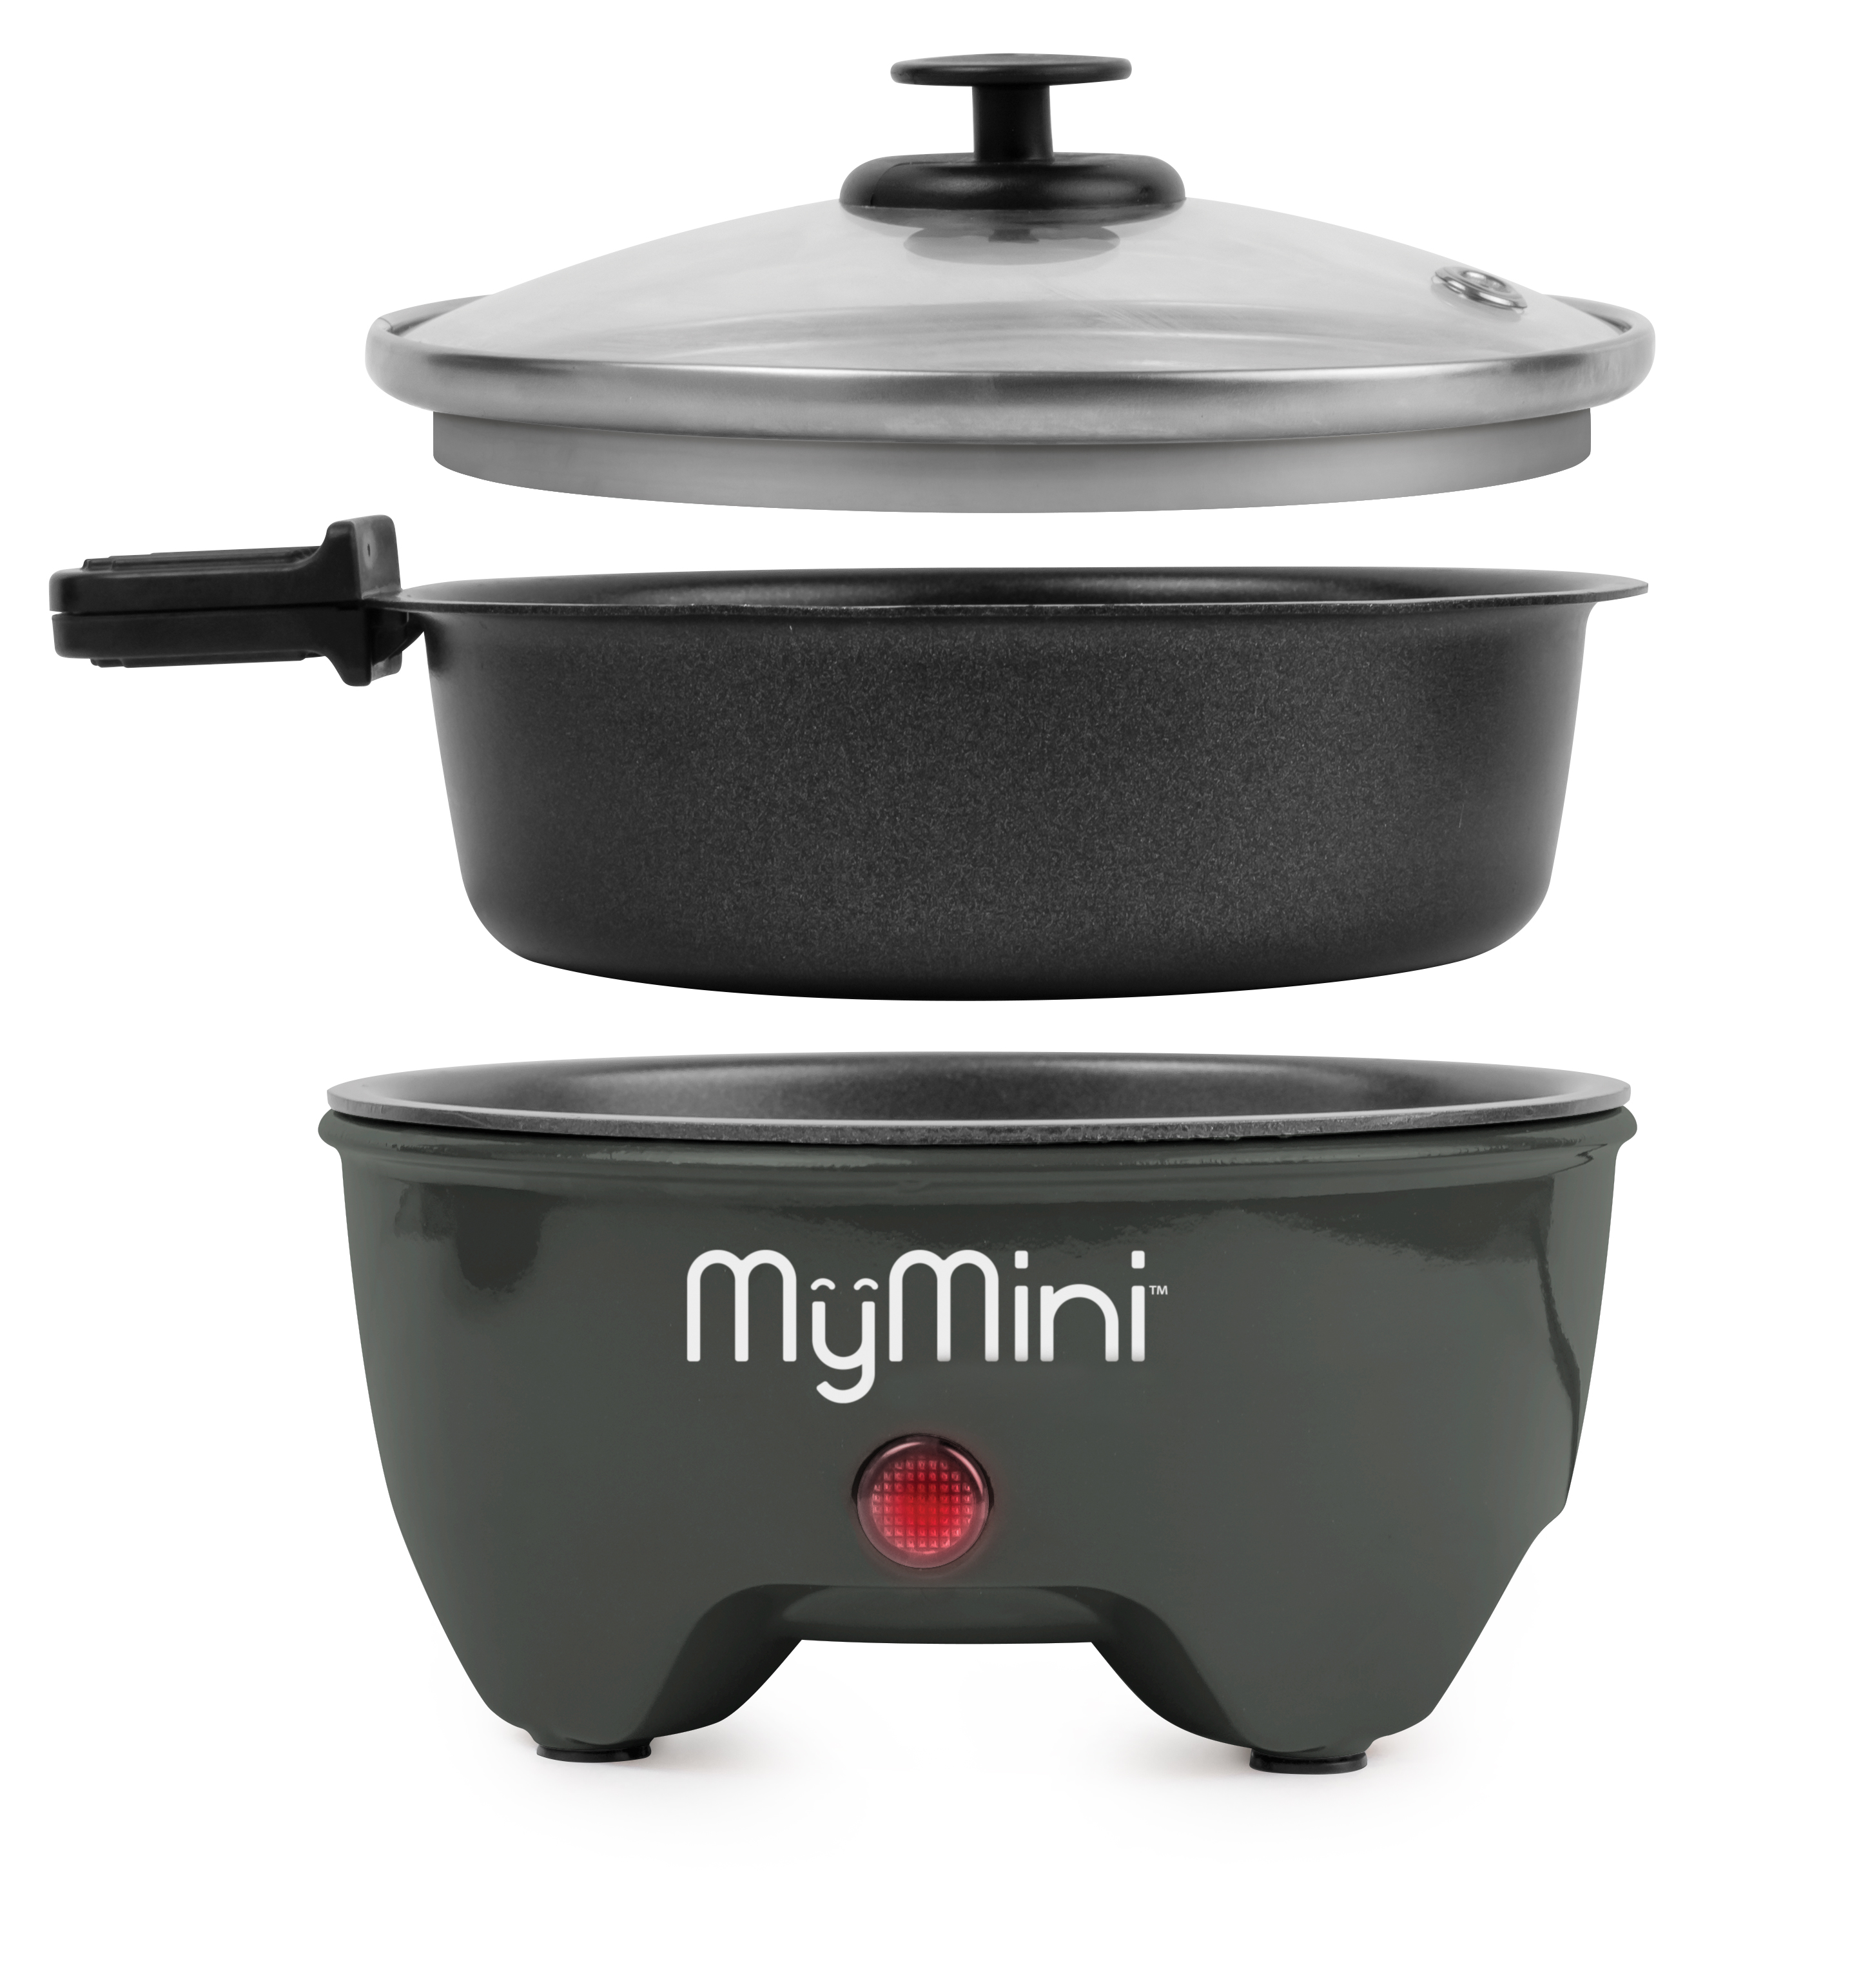 MyMini 5-inch Noodle Cooker & Skillet Electric Hot Pot, Blackberry (3.7" x 5.25", 1.25 Lb) - image 1 of 13